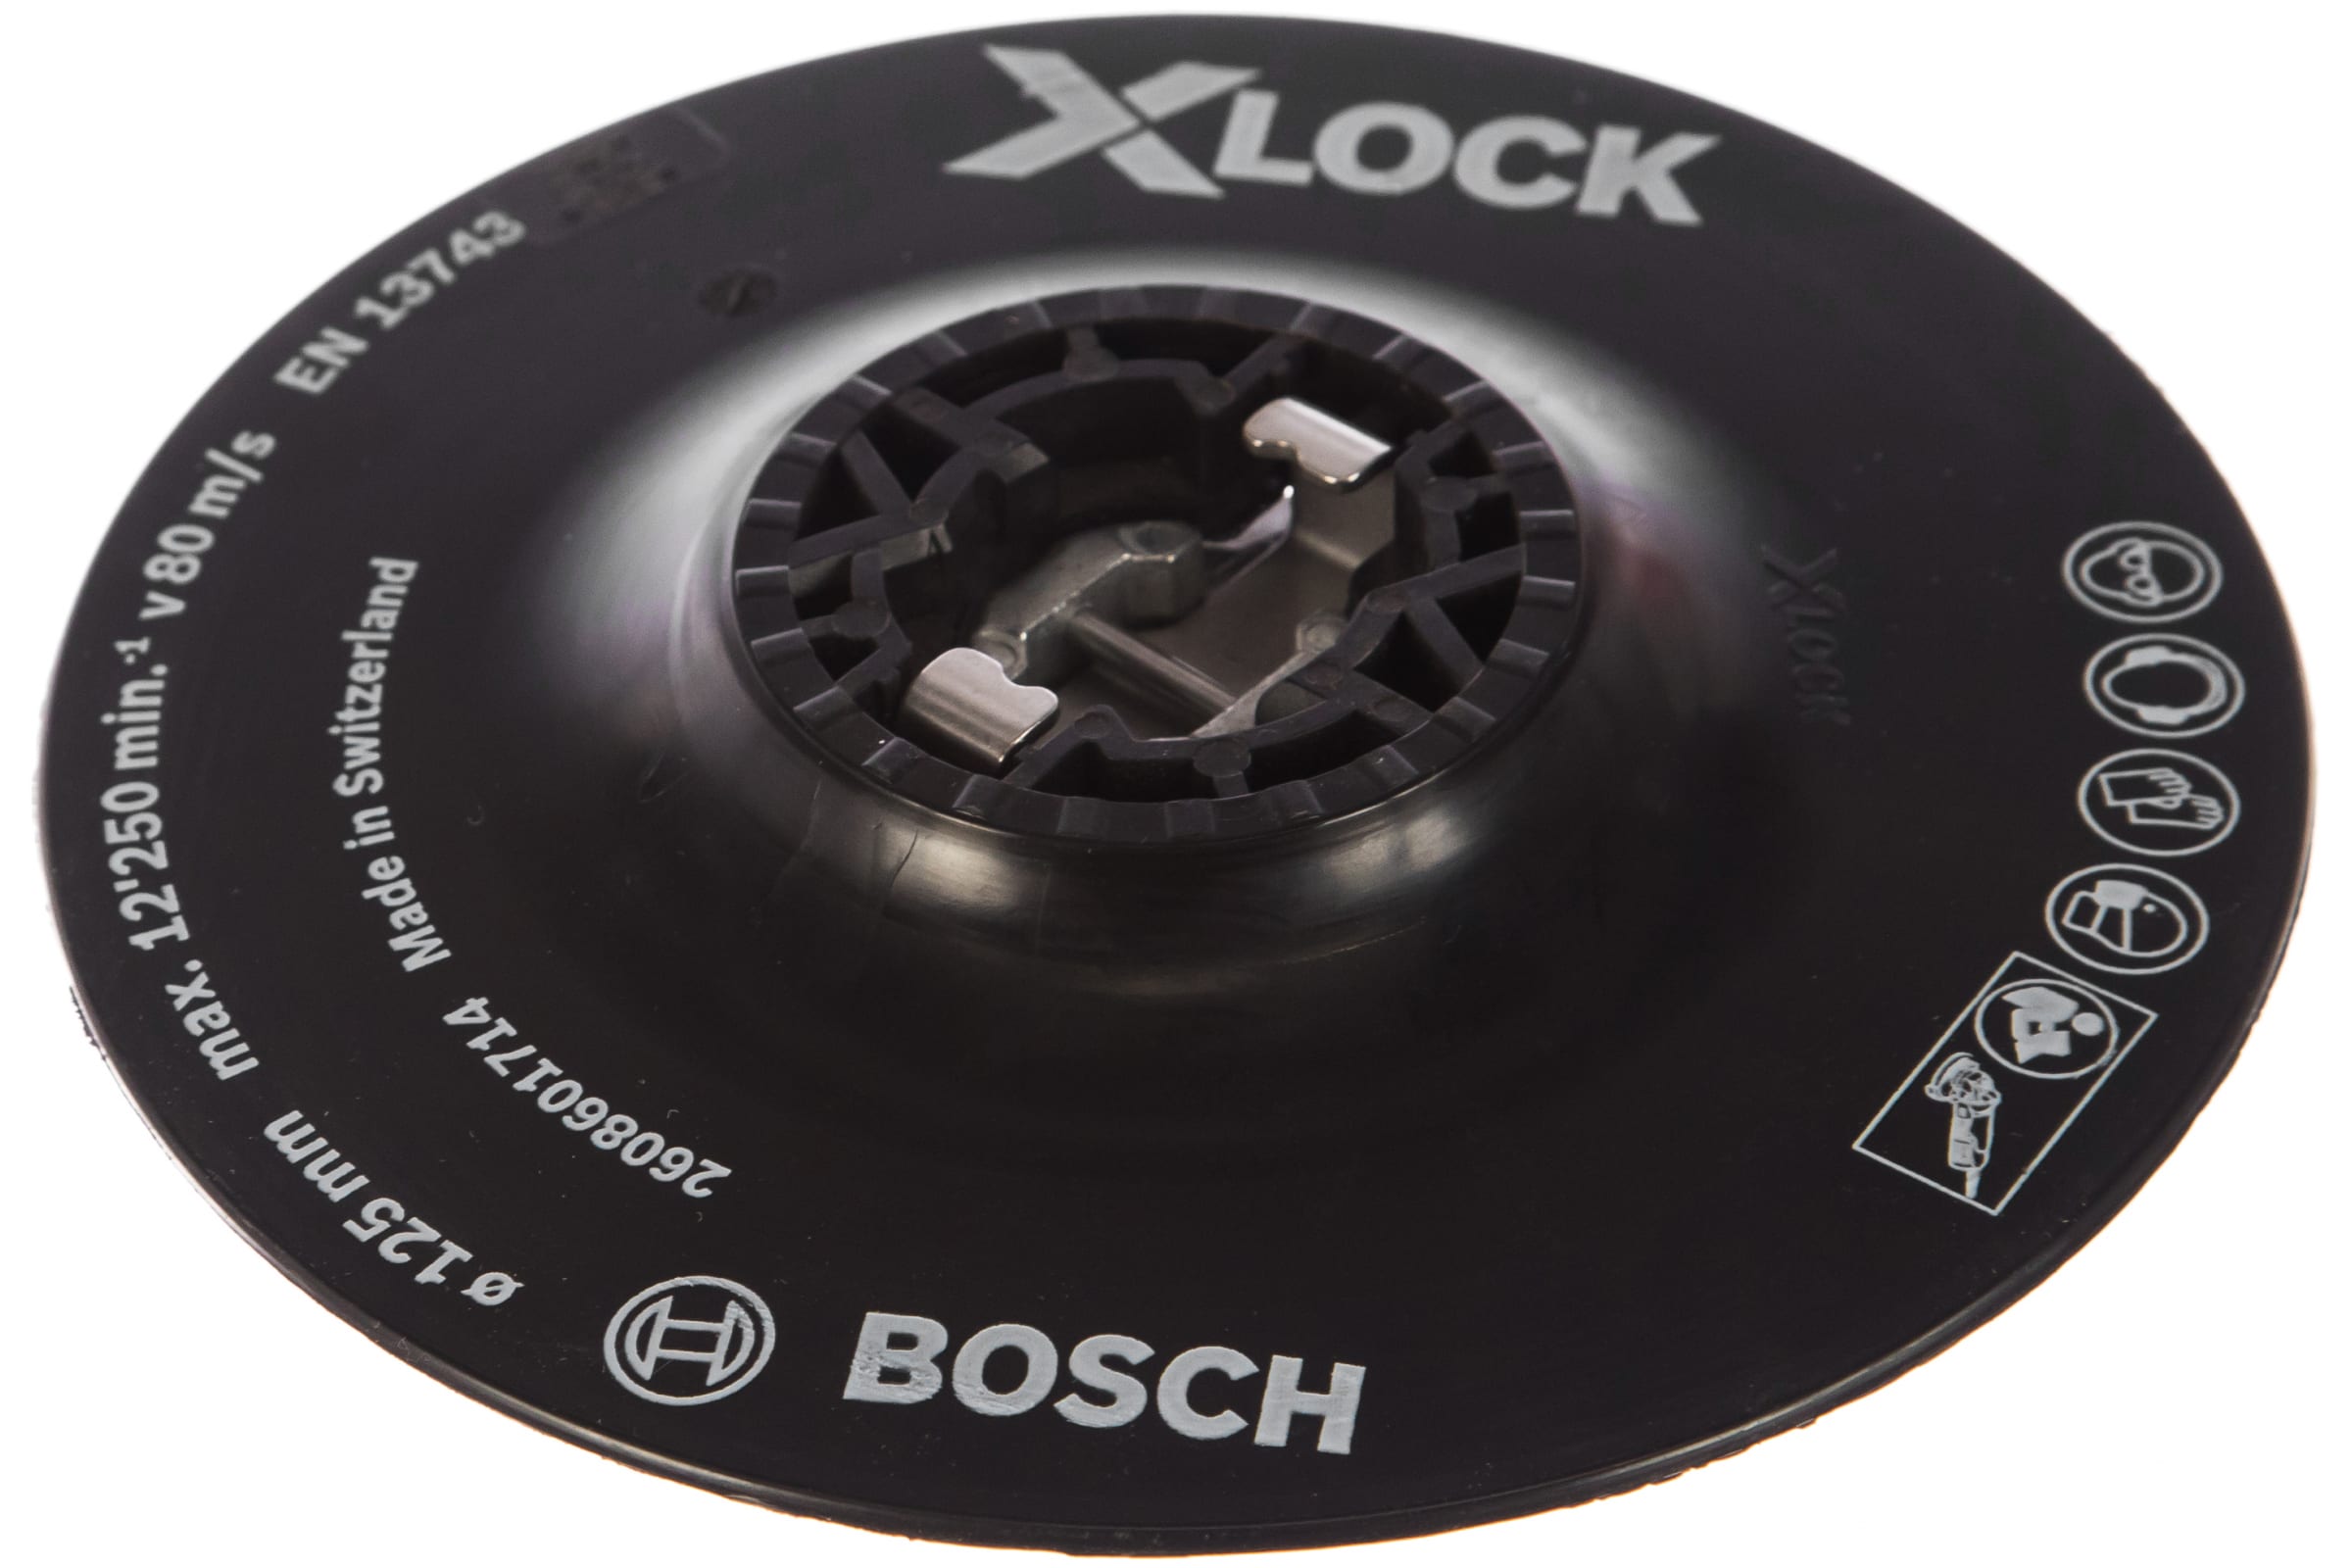 Тарелка опорная 125мм. Опорная тарелка Bosch x Lock. Опорная тарелка Bosch 125 мм. Опорная тарелка (125 мм)для Bosch get 55-125. Тарелка опорная для УШМ Bosch x-Lock, средняя, 125мм.